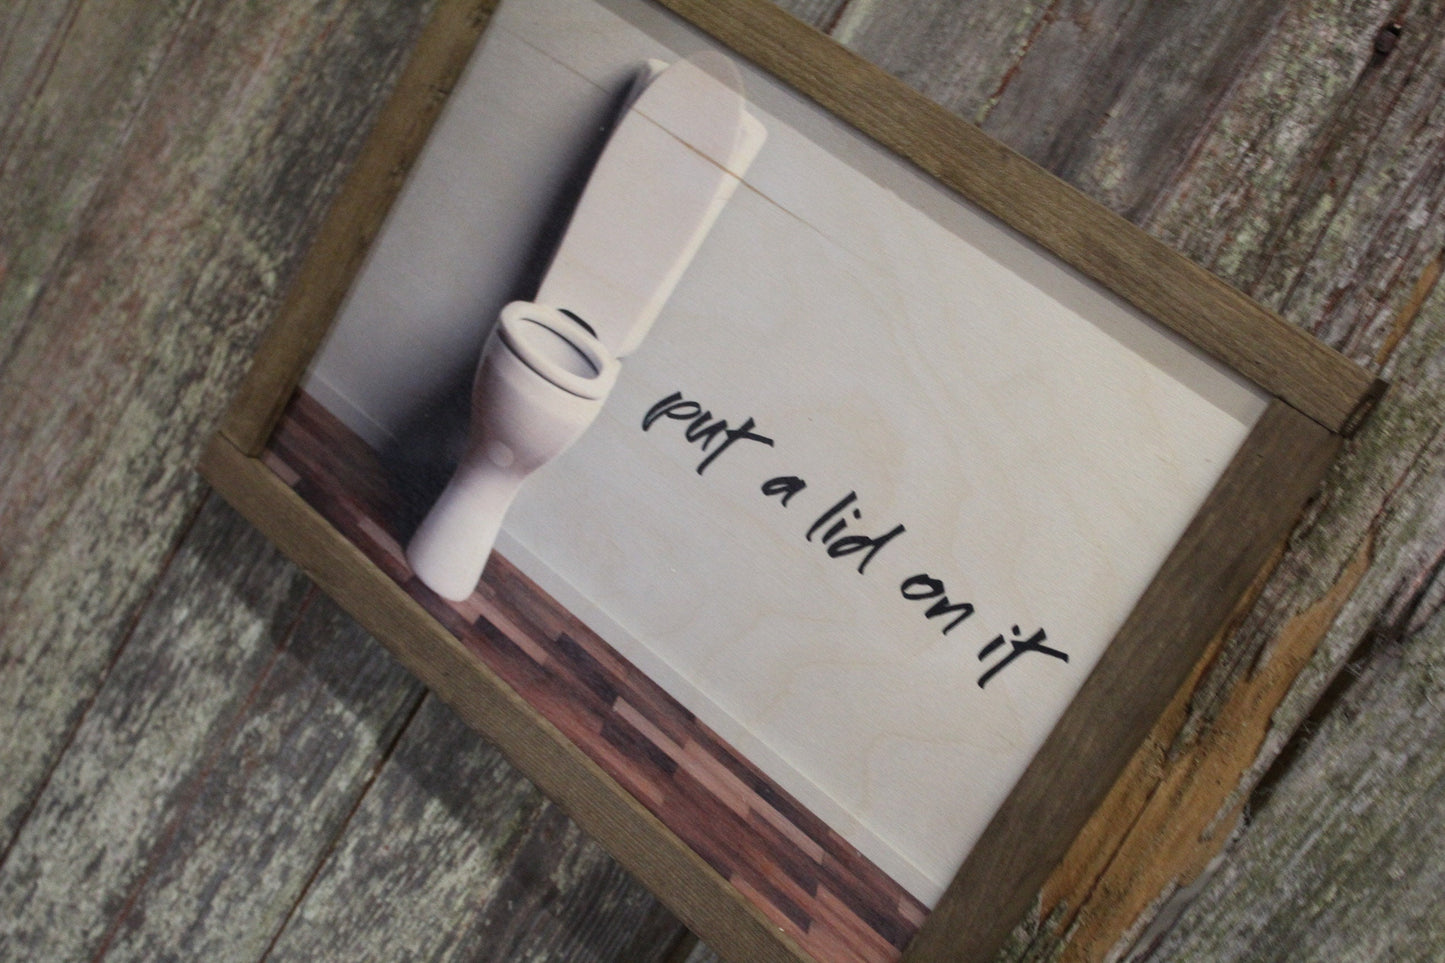 Bathroom Wood Sign Put A Lid On It Silly Toilet Joke Farmhouse Decor Gift Print Primitive Rustic Barn Wood Restroom Rules